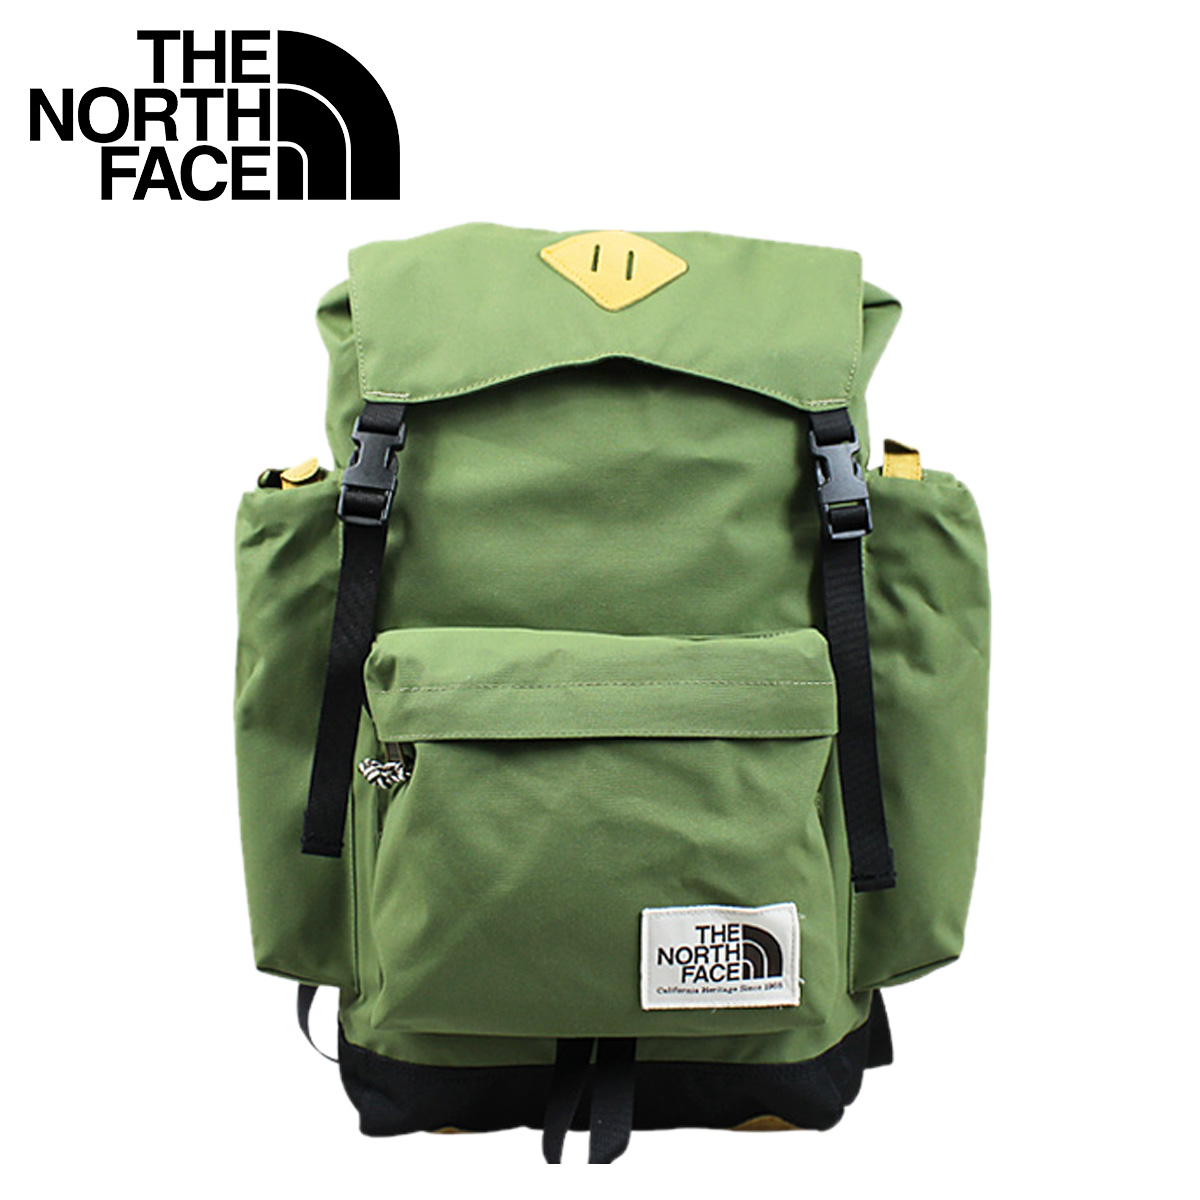 the north face rucksack backpack Online 